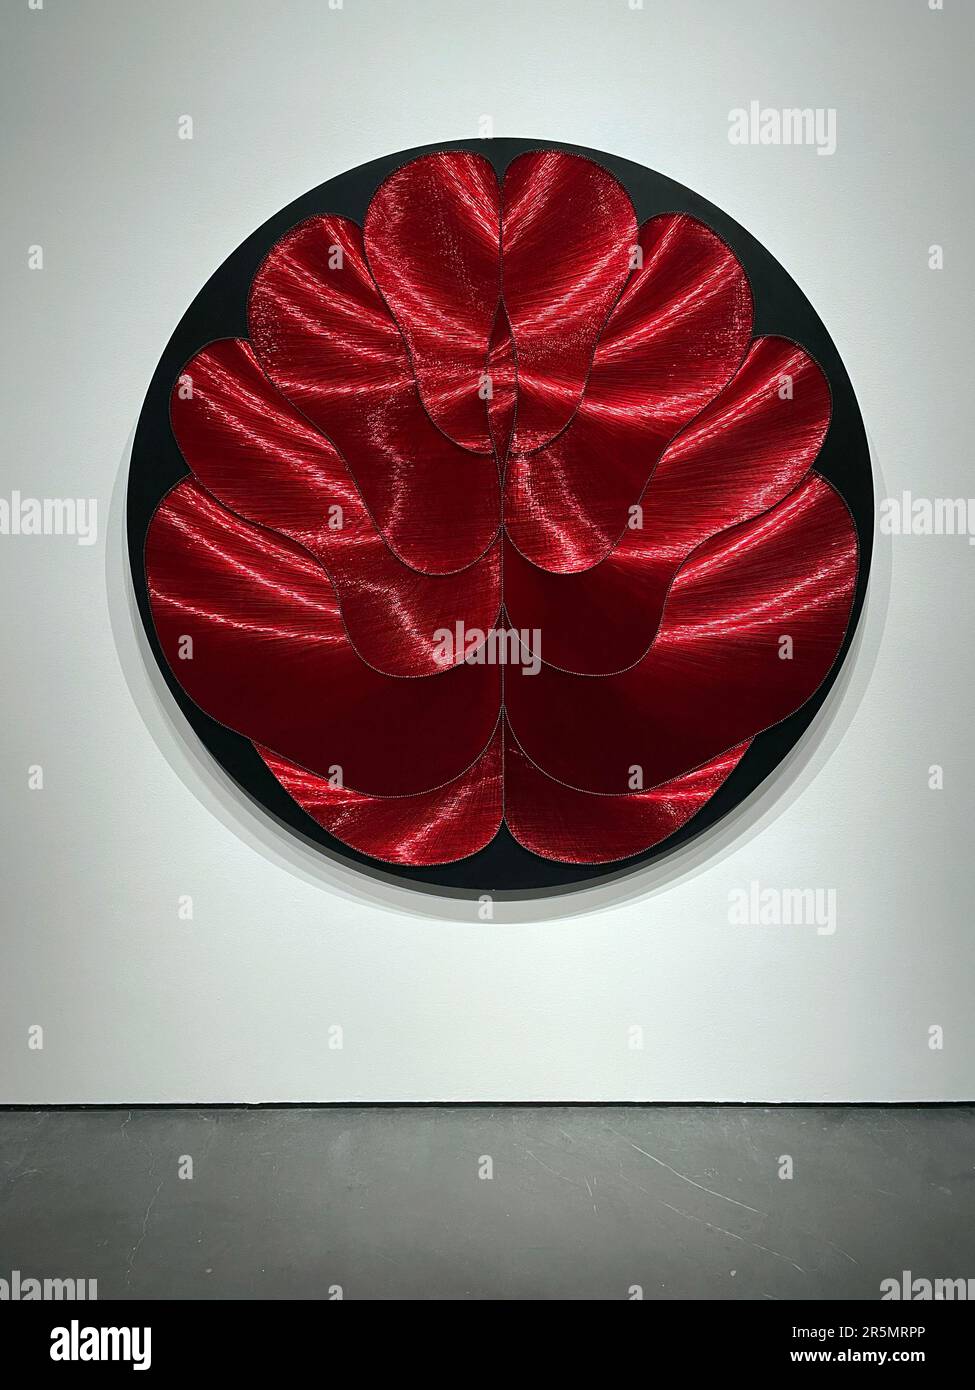 Oeuvre intitulée Red Seed de l'artiste turc Gaulay Semercioglu exposée au LACMA à Los Angeles, CA Banque D'Images